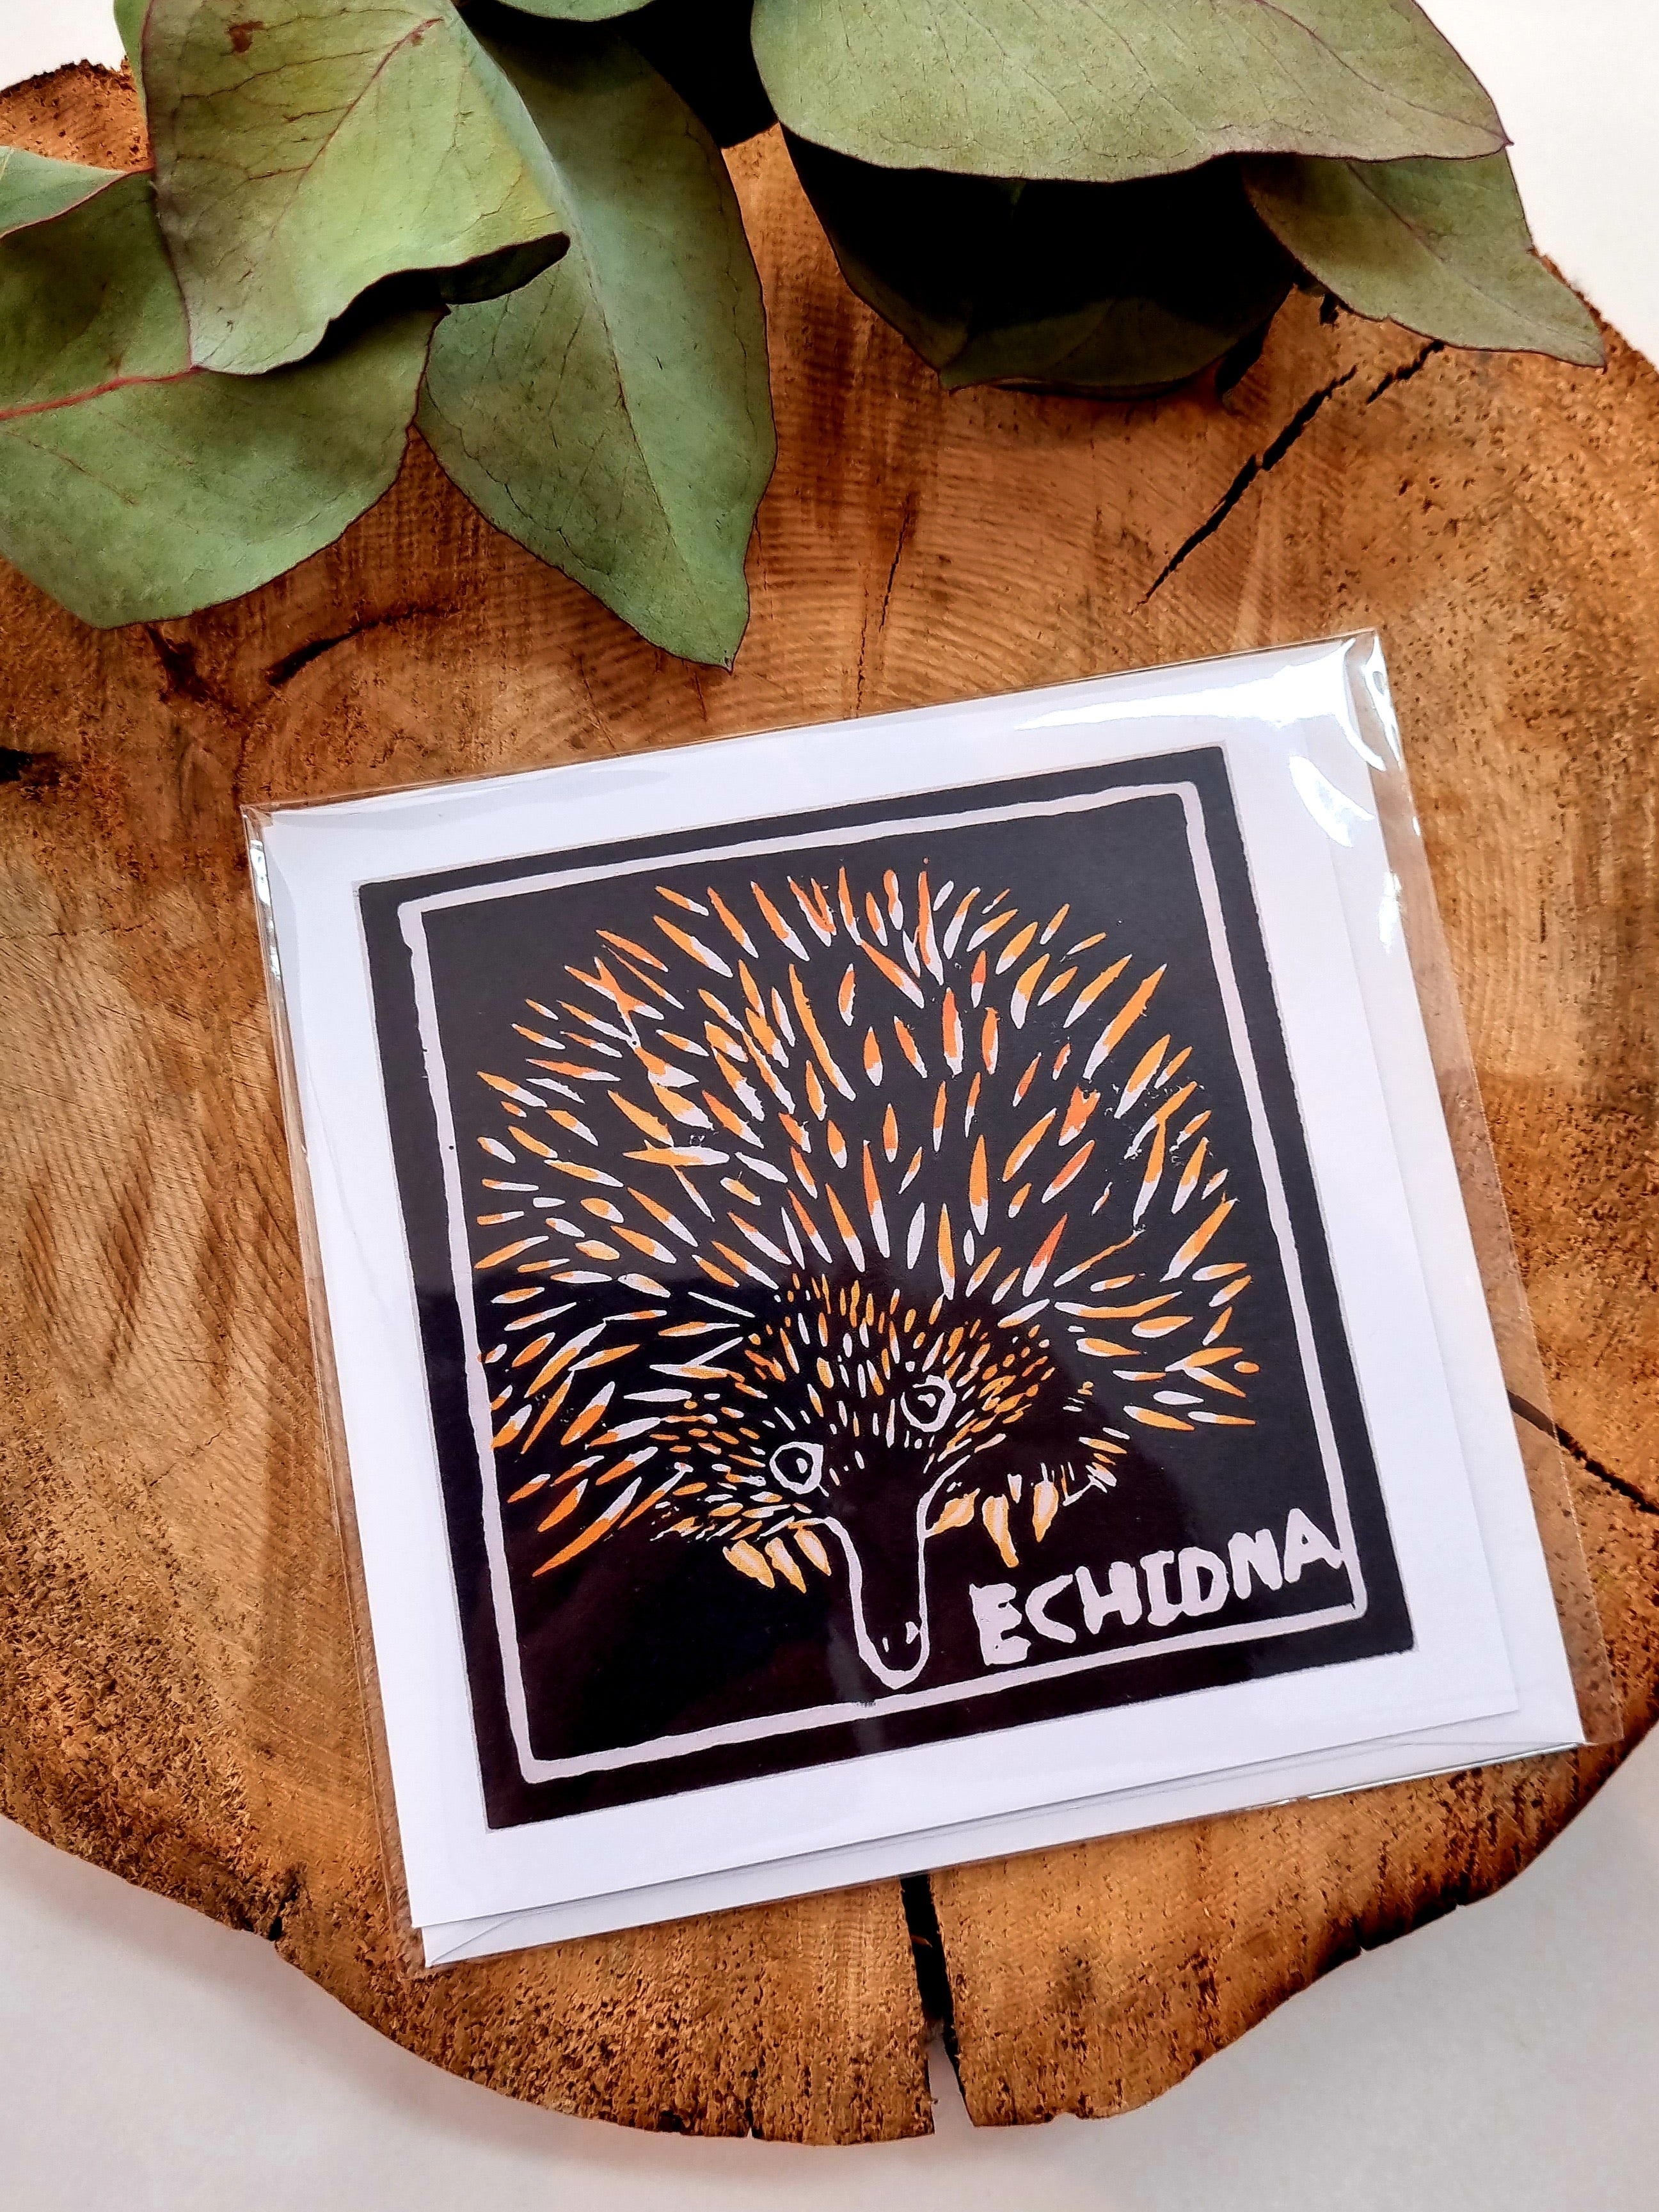 Tasmanian Greeting Cards by Ilana Bea Designs greeting cards Ilana Bea Designs Echidna 